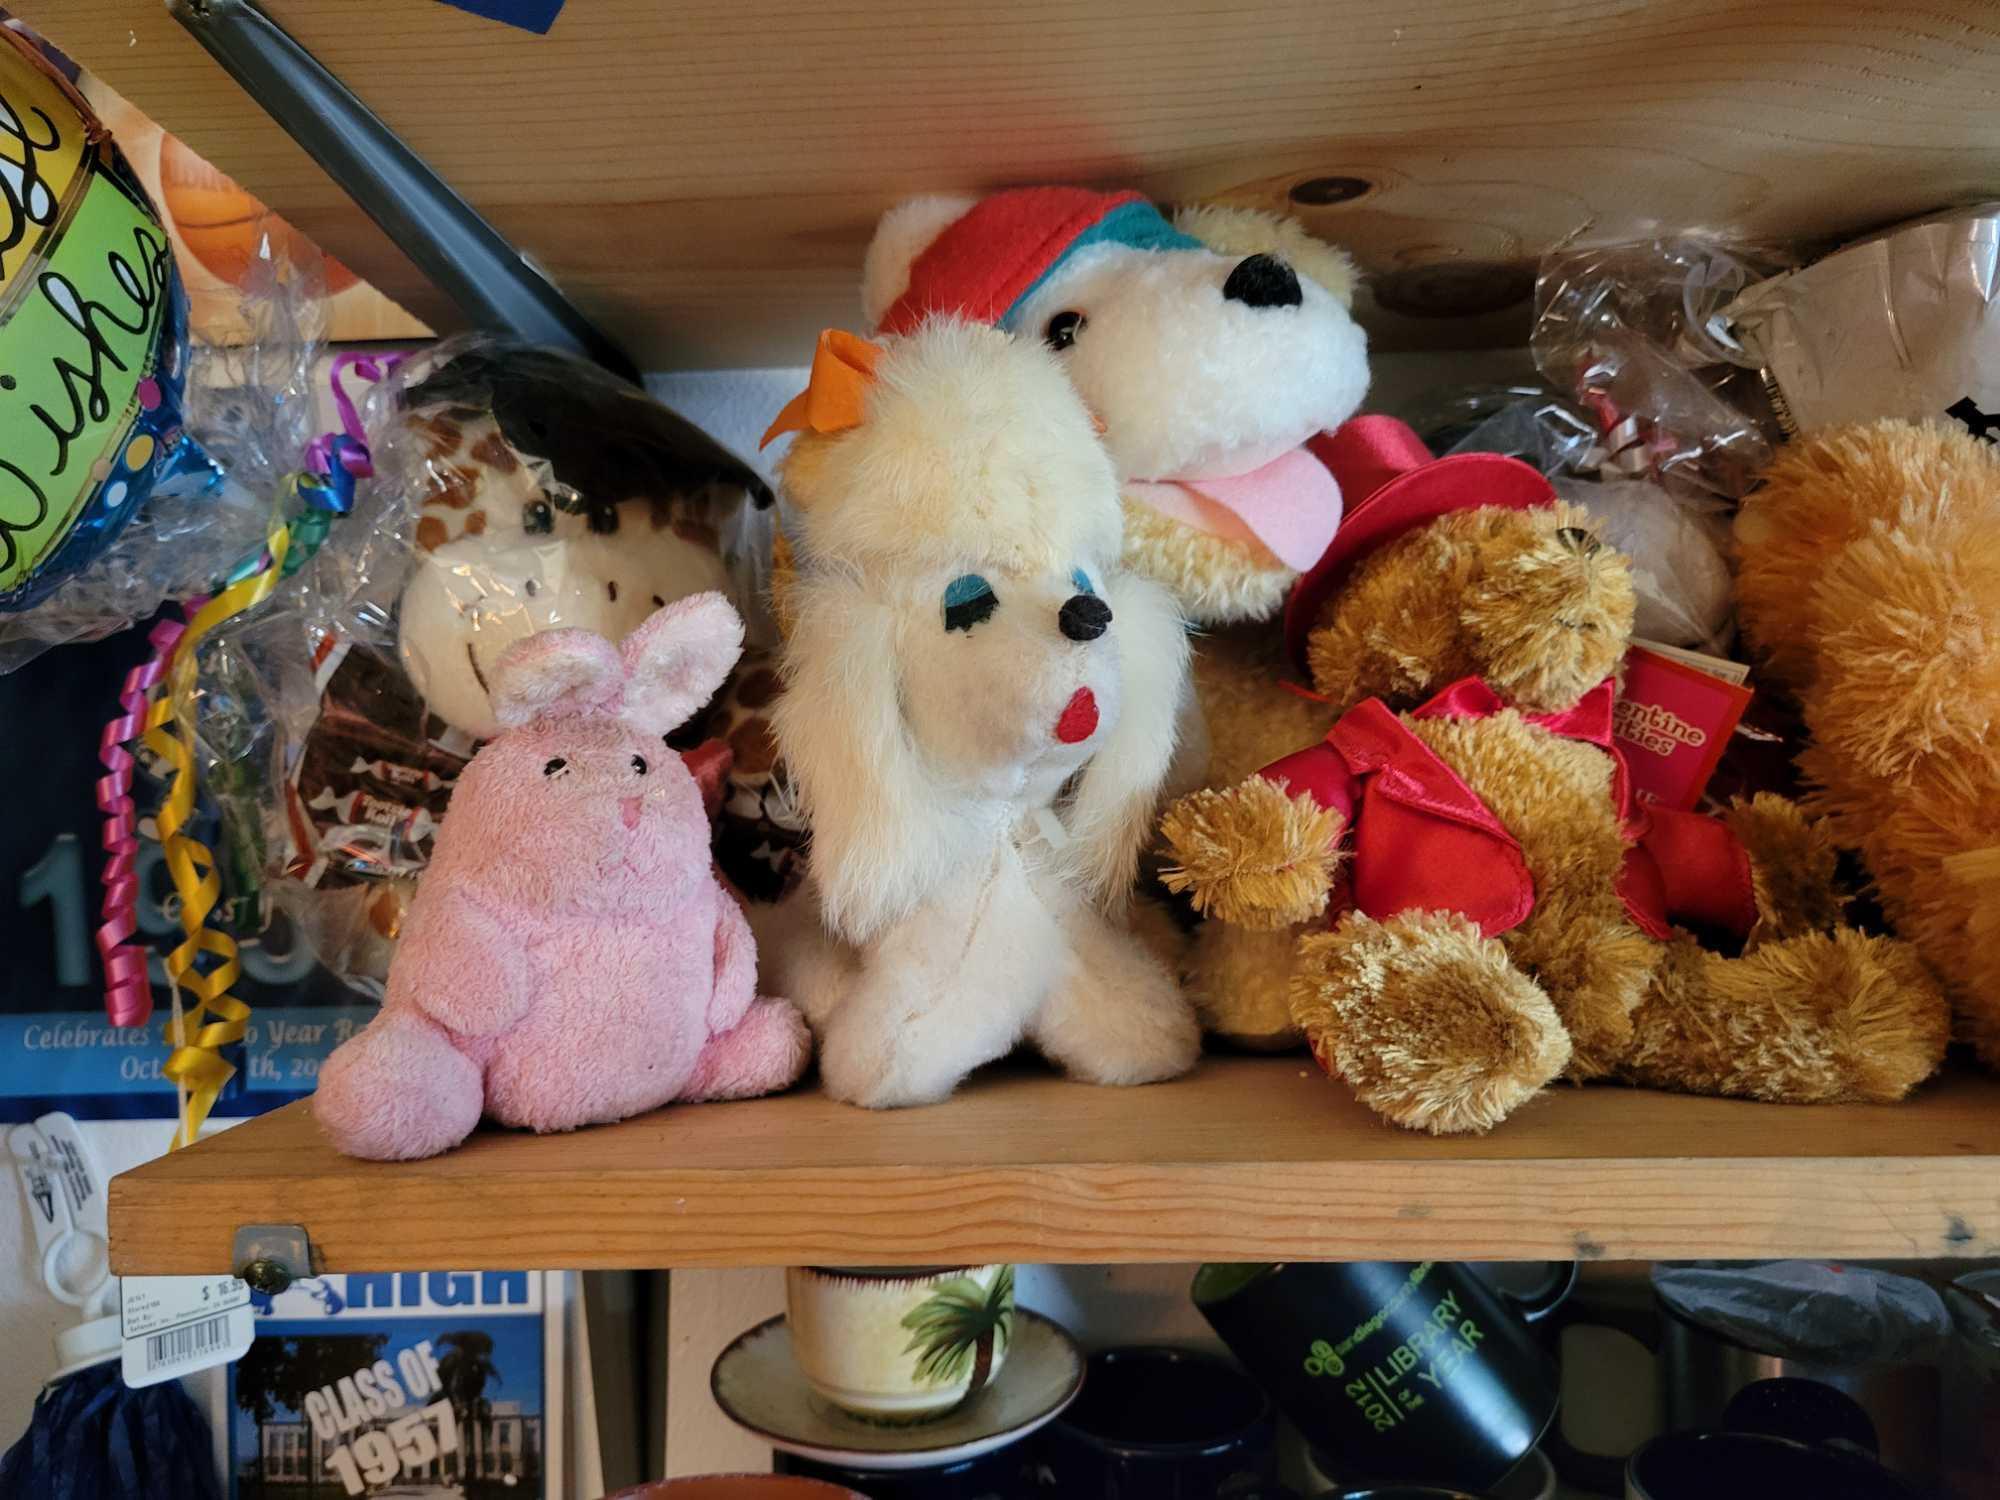 Stuffed animals Cherished Teddies knick knacks and more.